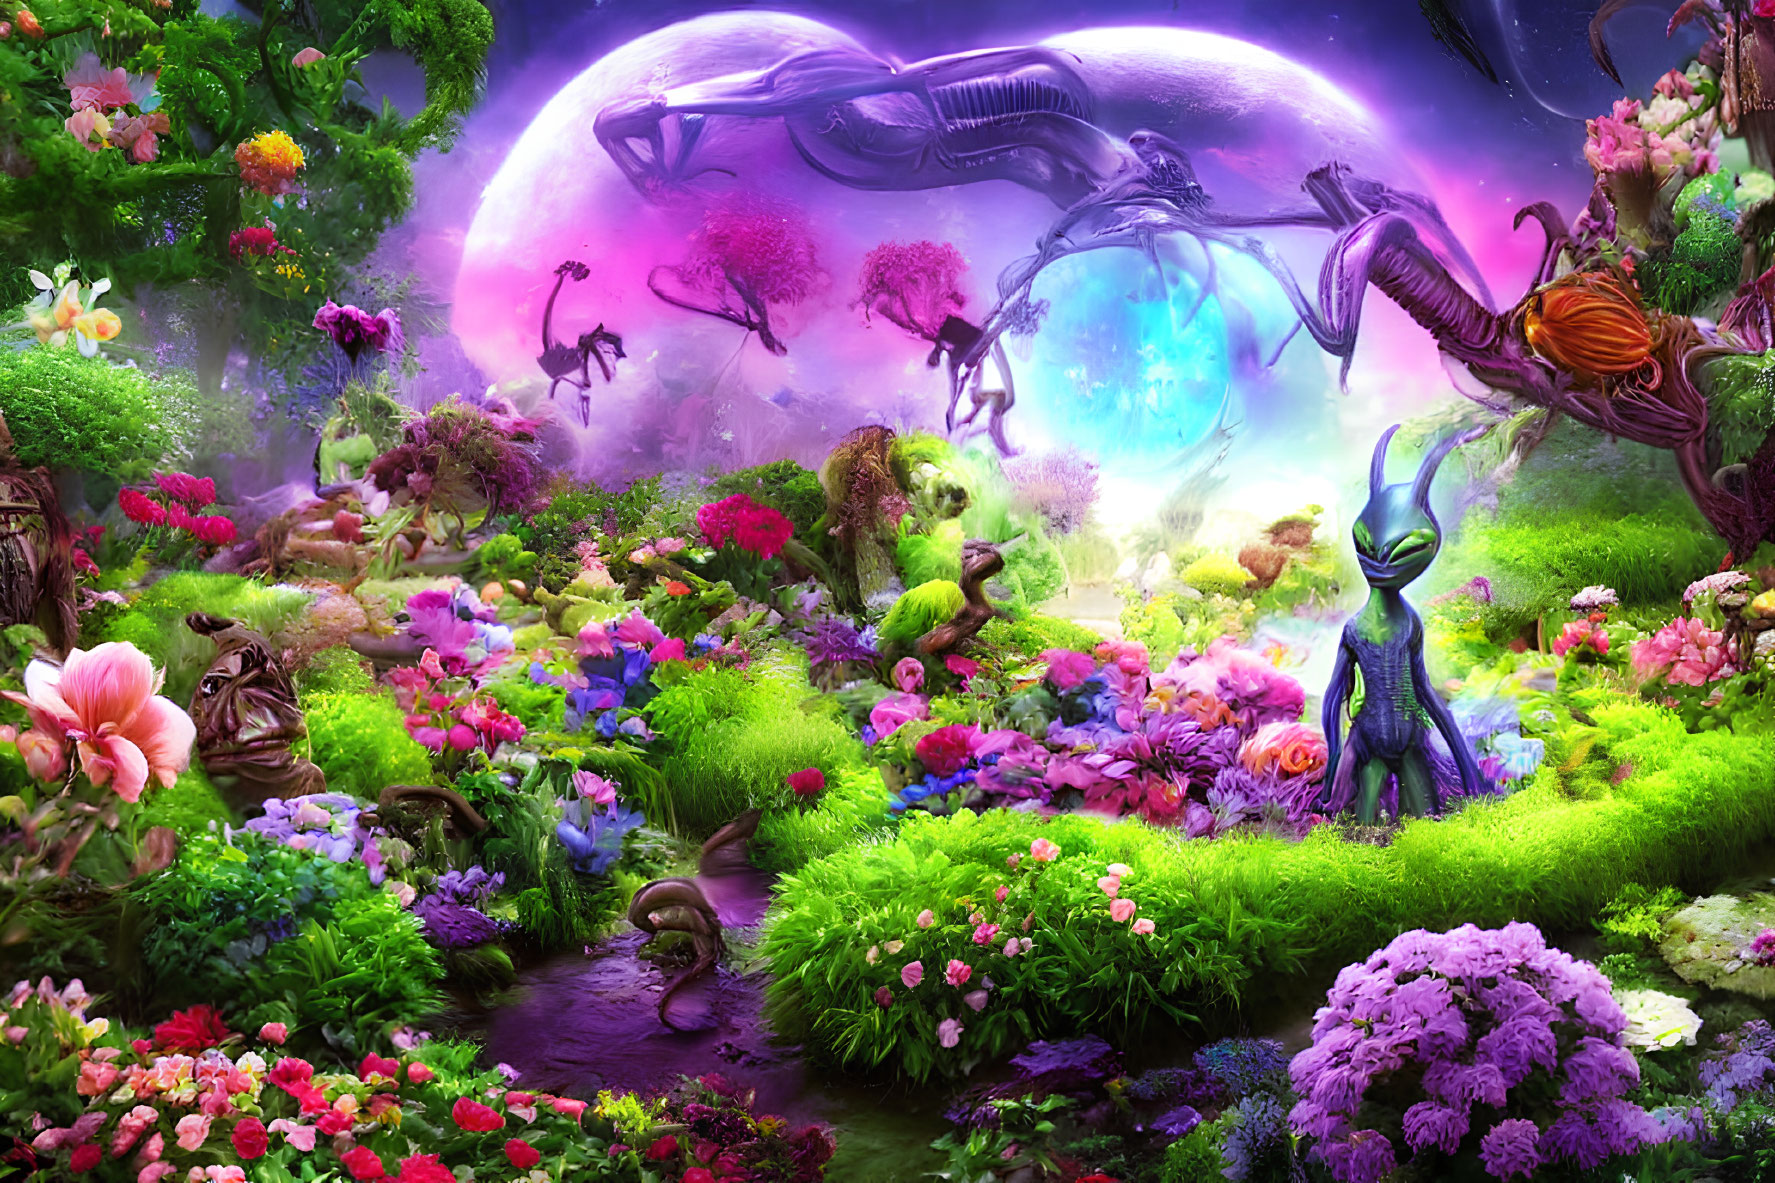 Fantasy garden with moon, creatures, and wildlife under starlit sky